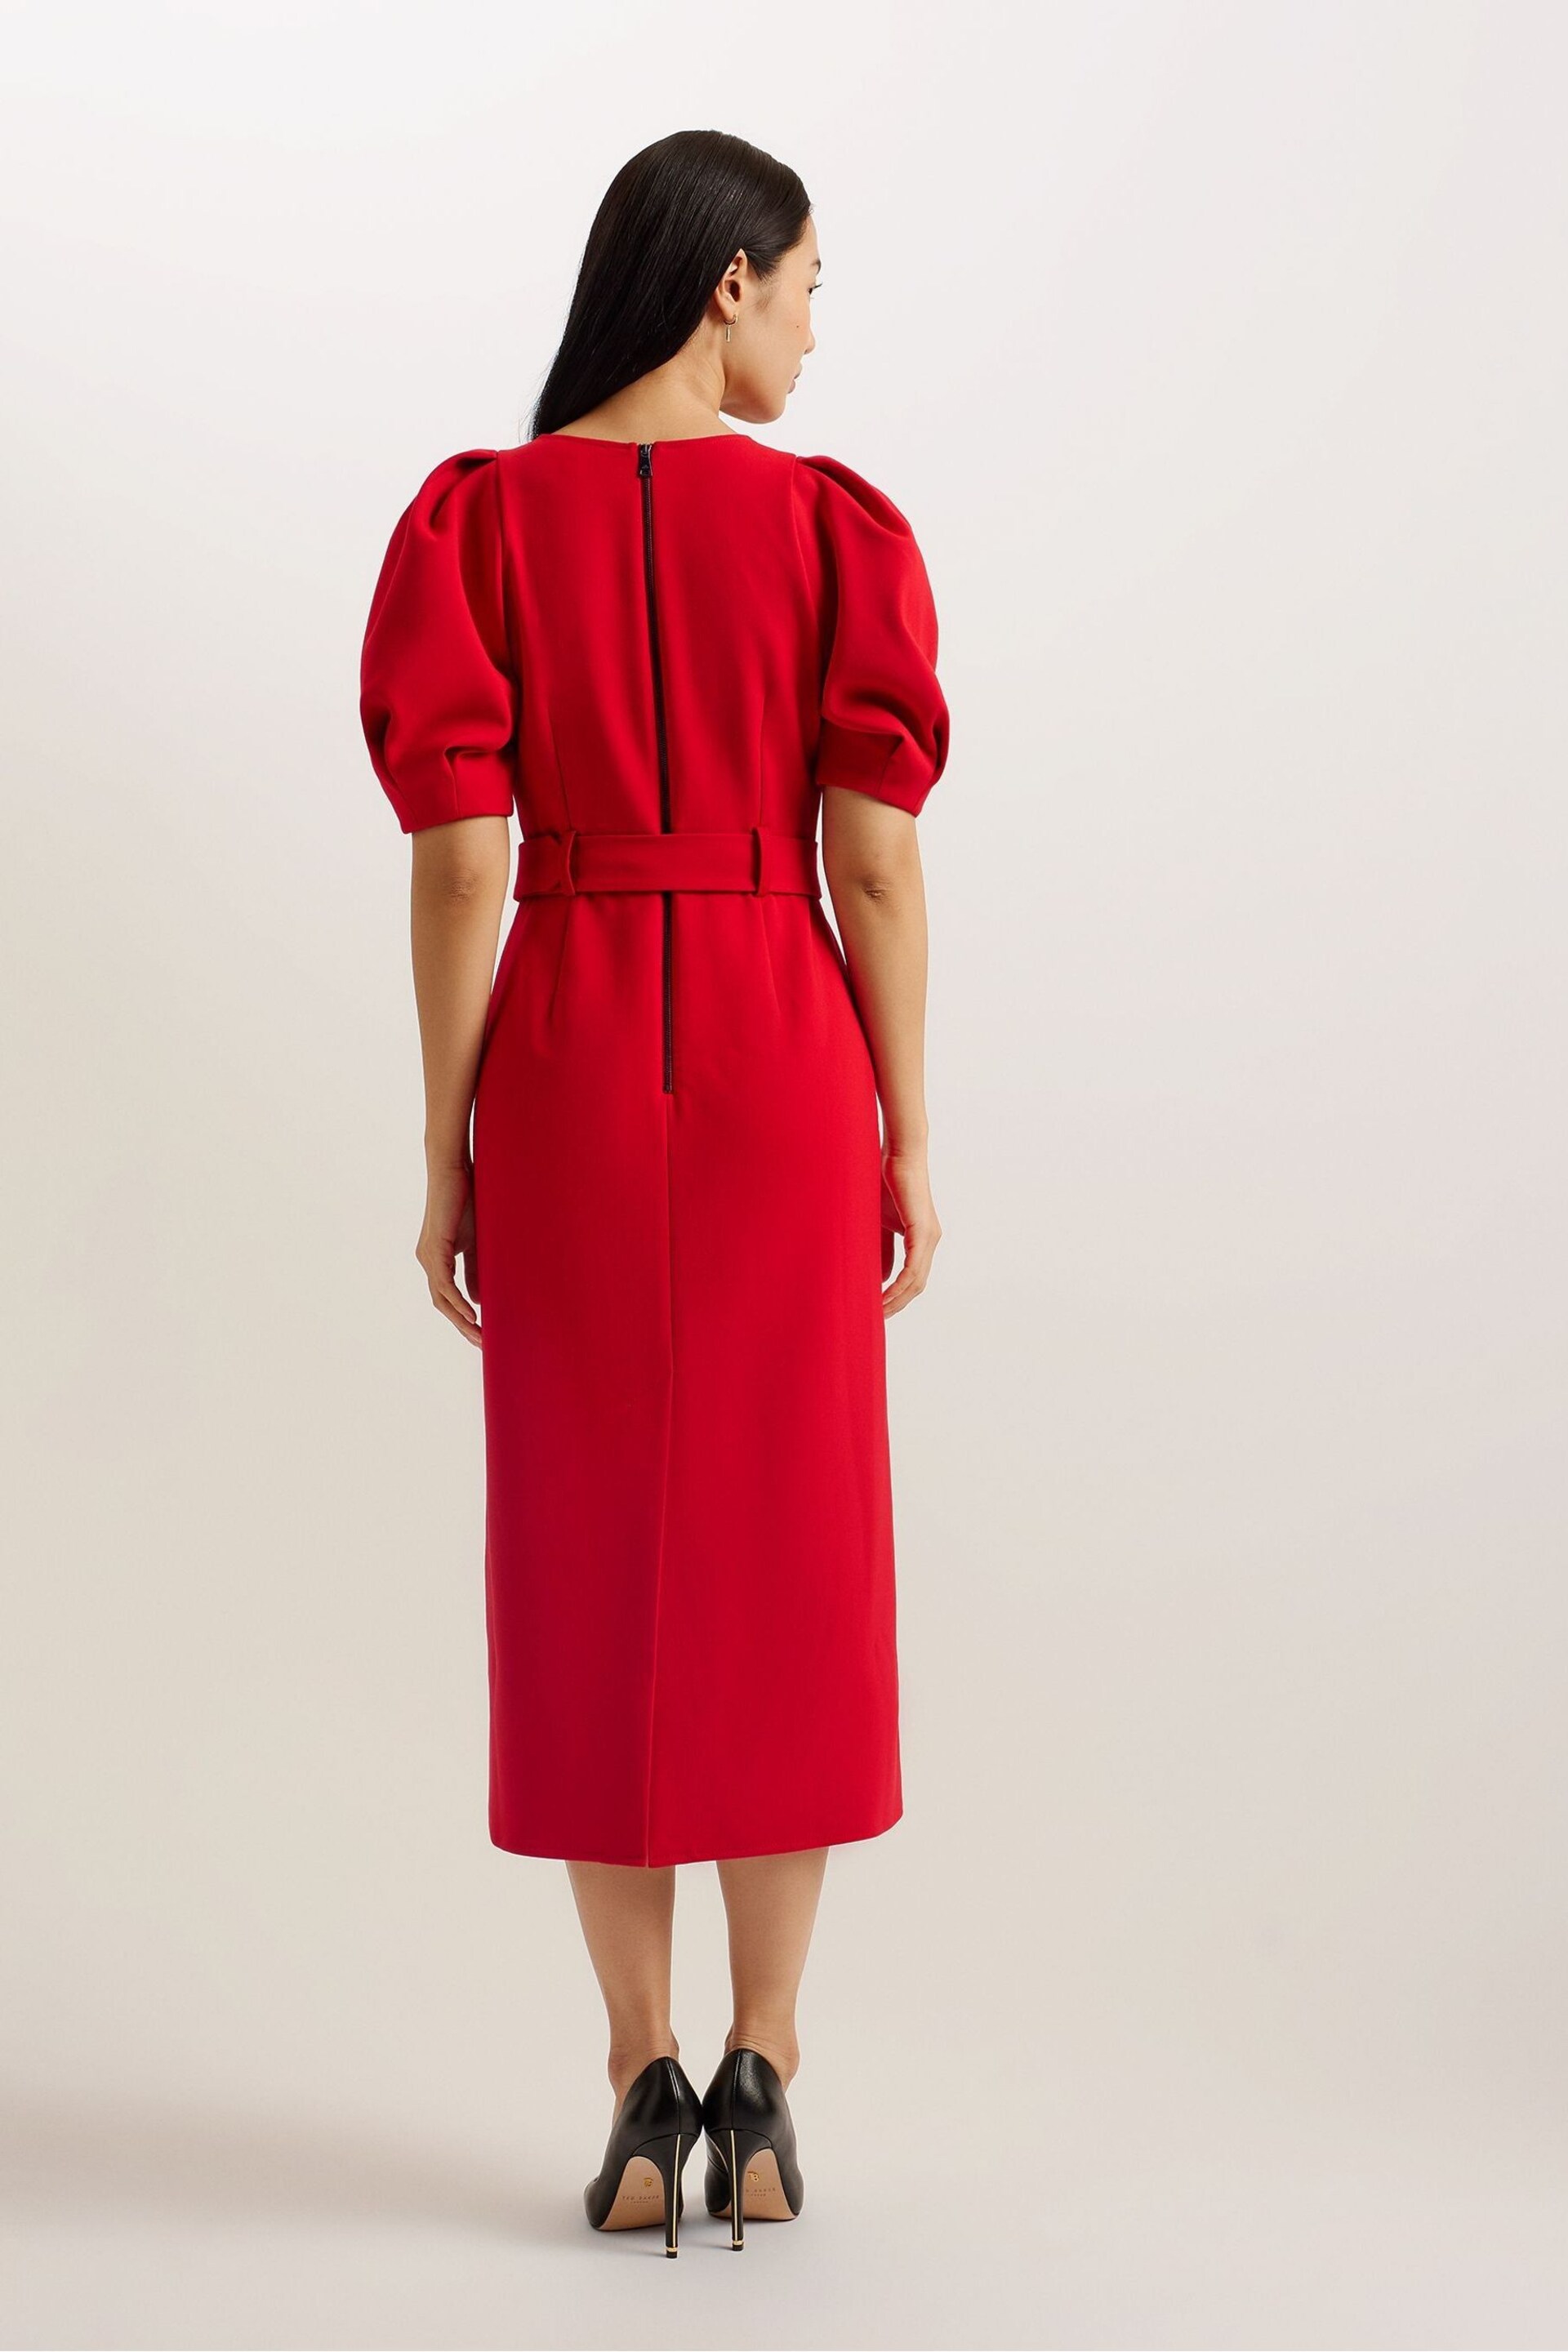 Ted Baker Red Gabyela Puff Sleeve Midi Dress With Belt - Image 4 of 5